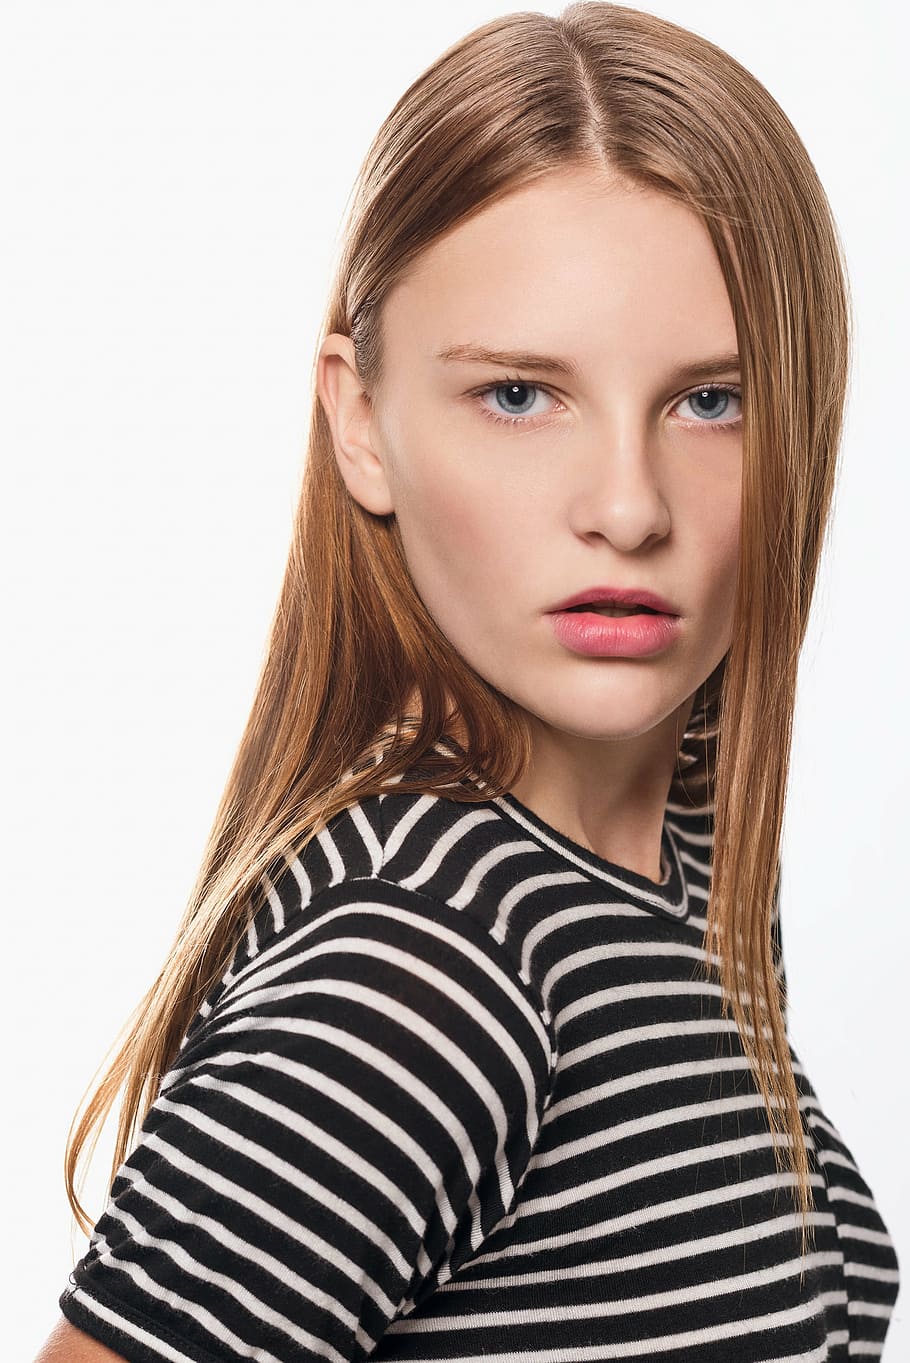 HD wallpaper: woman wearing striped shirt, model, fashion, girl, female